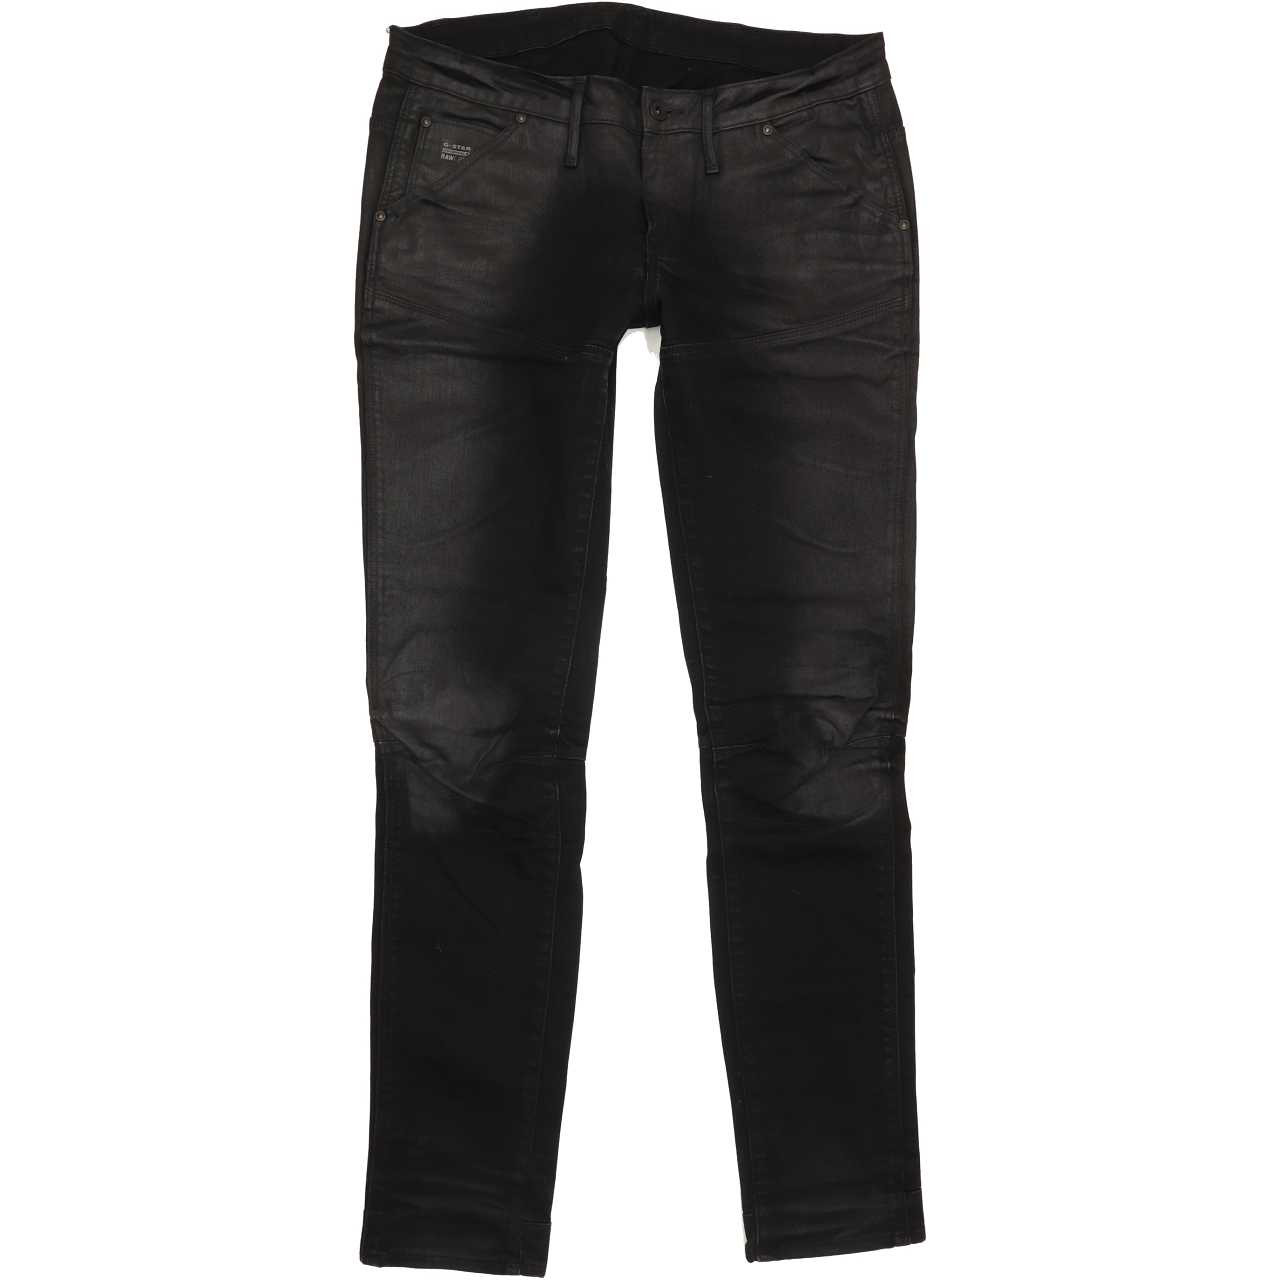 G-Star 5620 Women Black Tapered Slim Stretch Jeans W32 L31